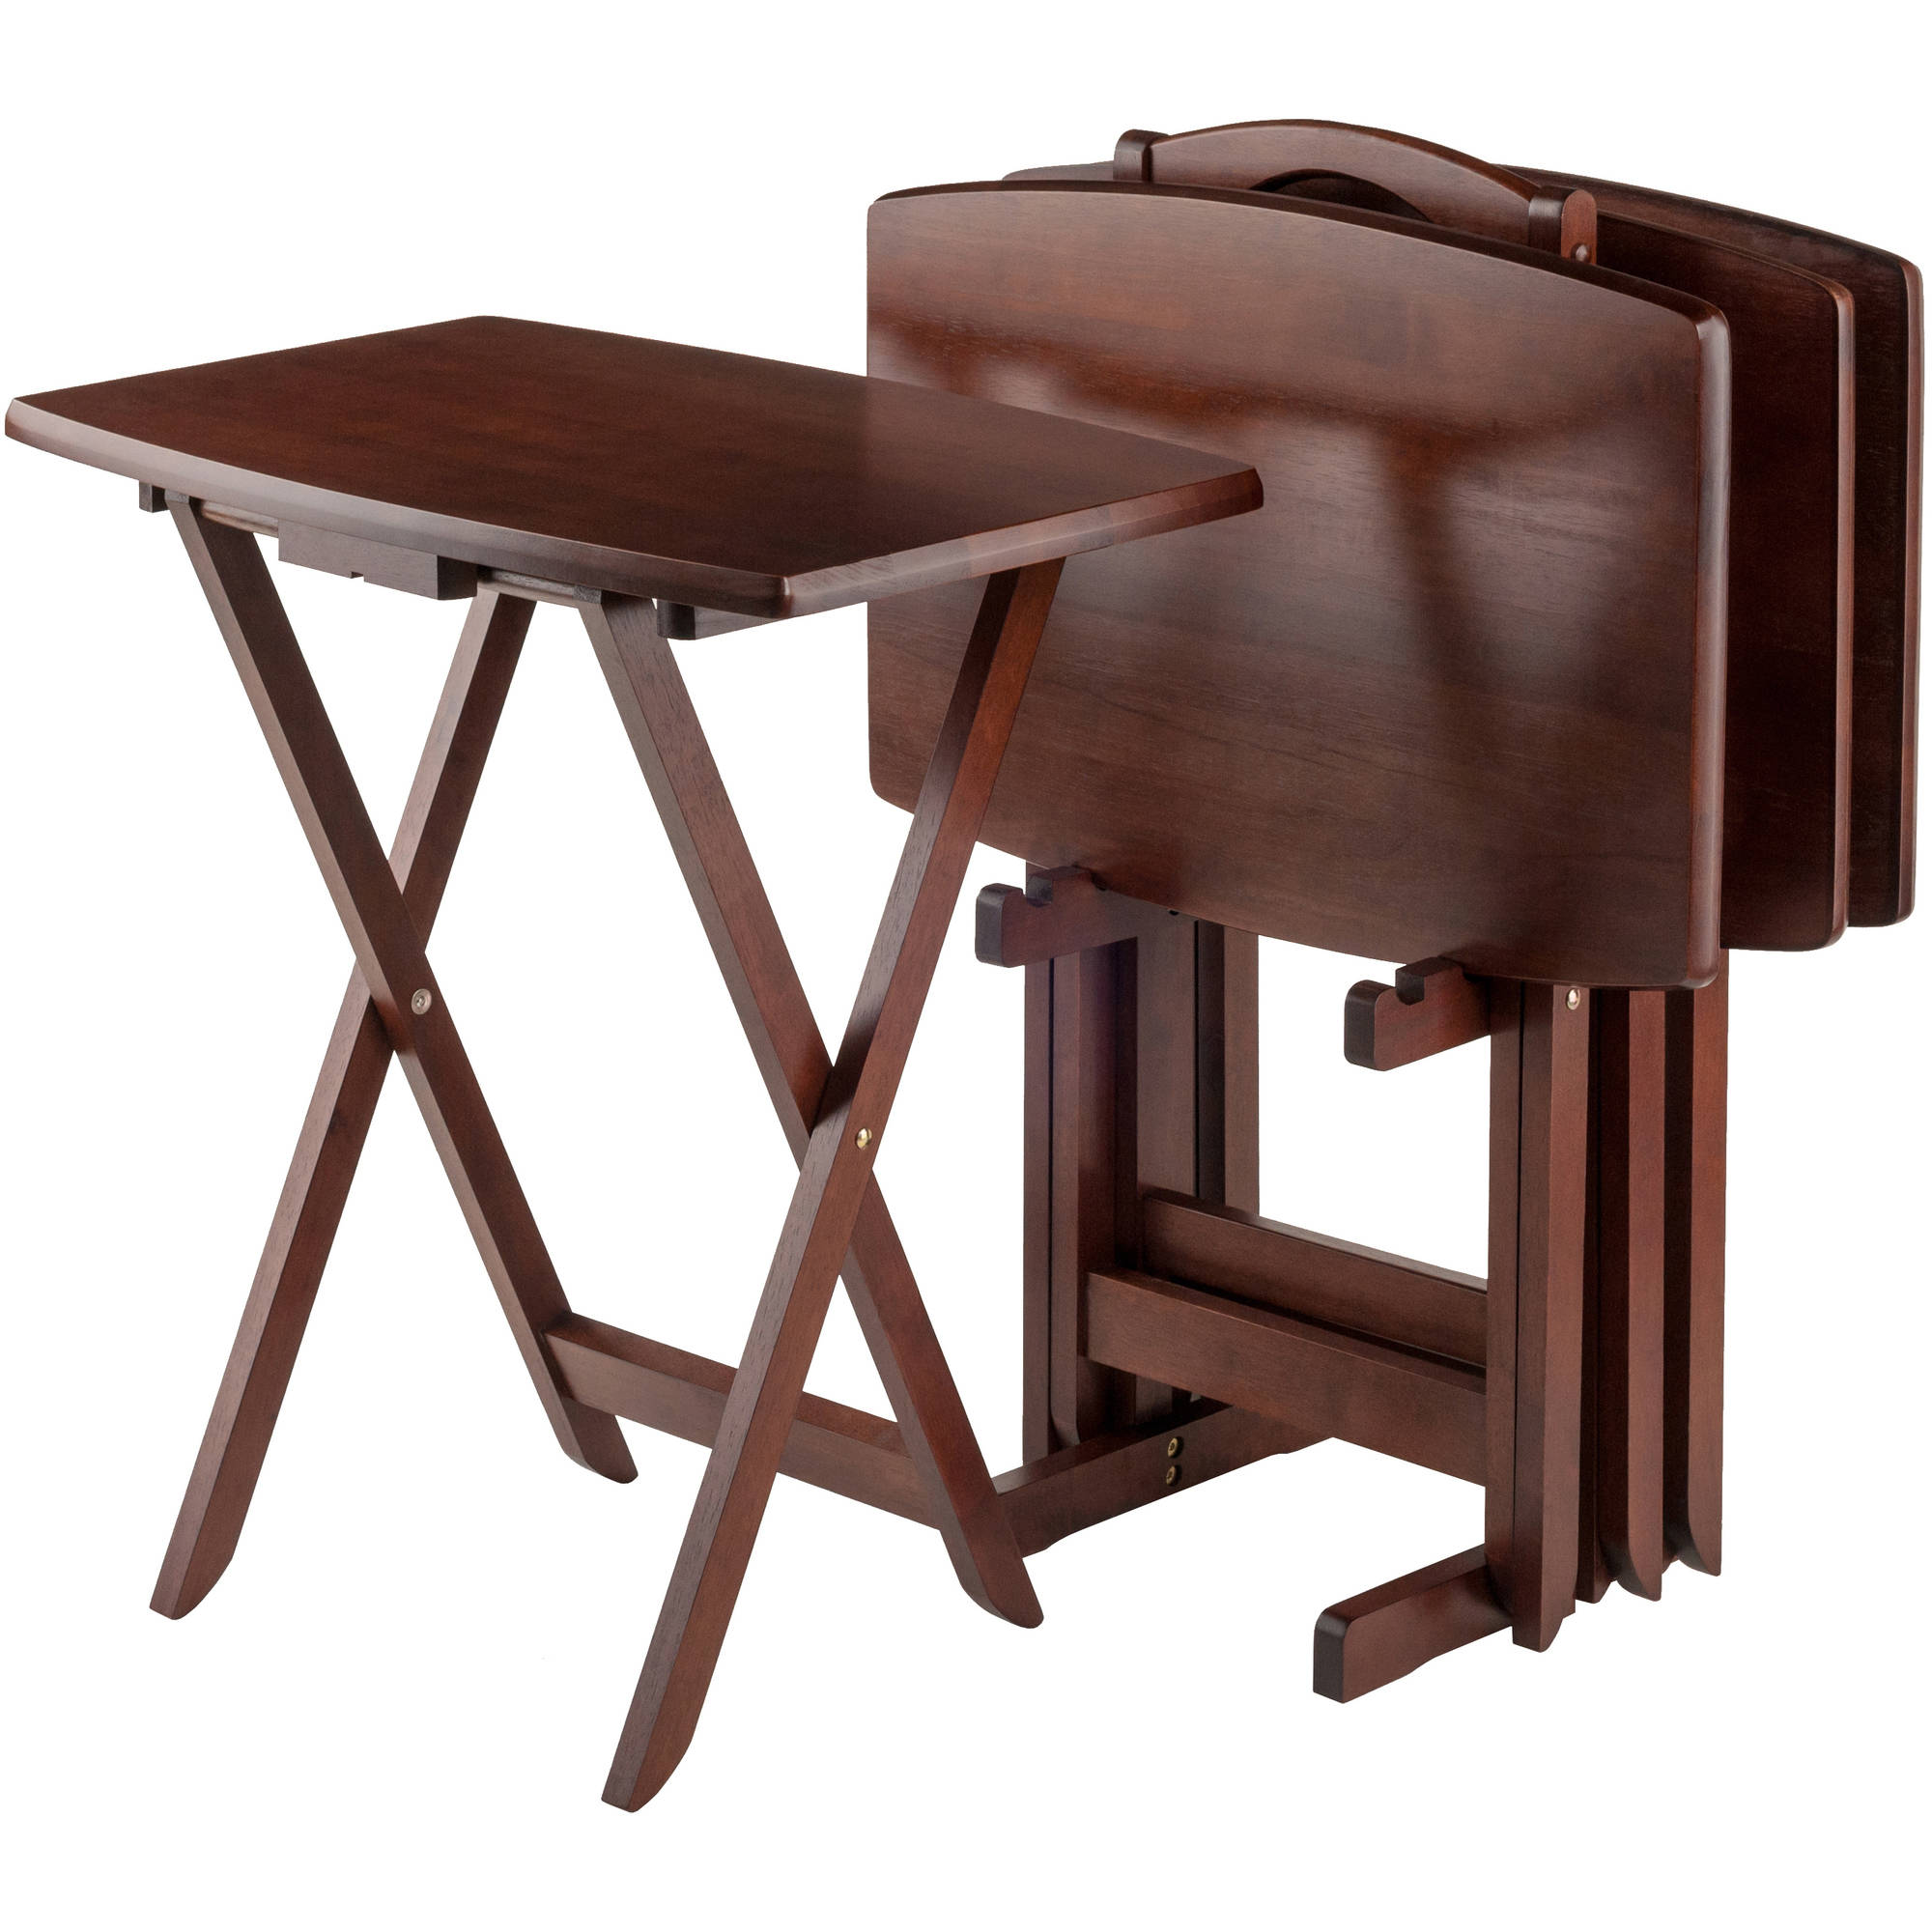 Set of 4 Portable Wood TV Table Folding Tray Desk Serving Furniture Walnut  New - Traveller Location